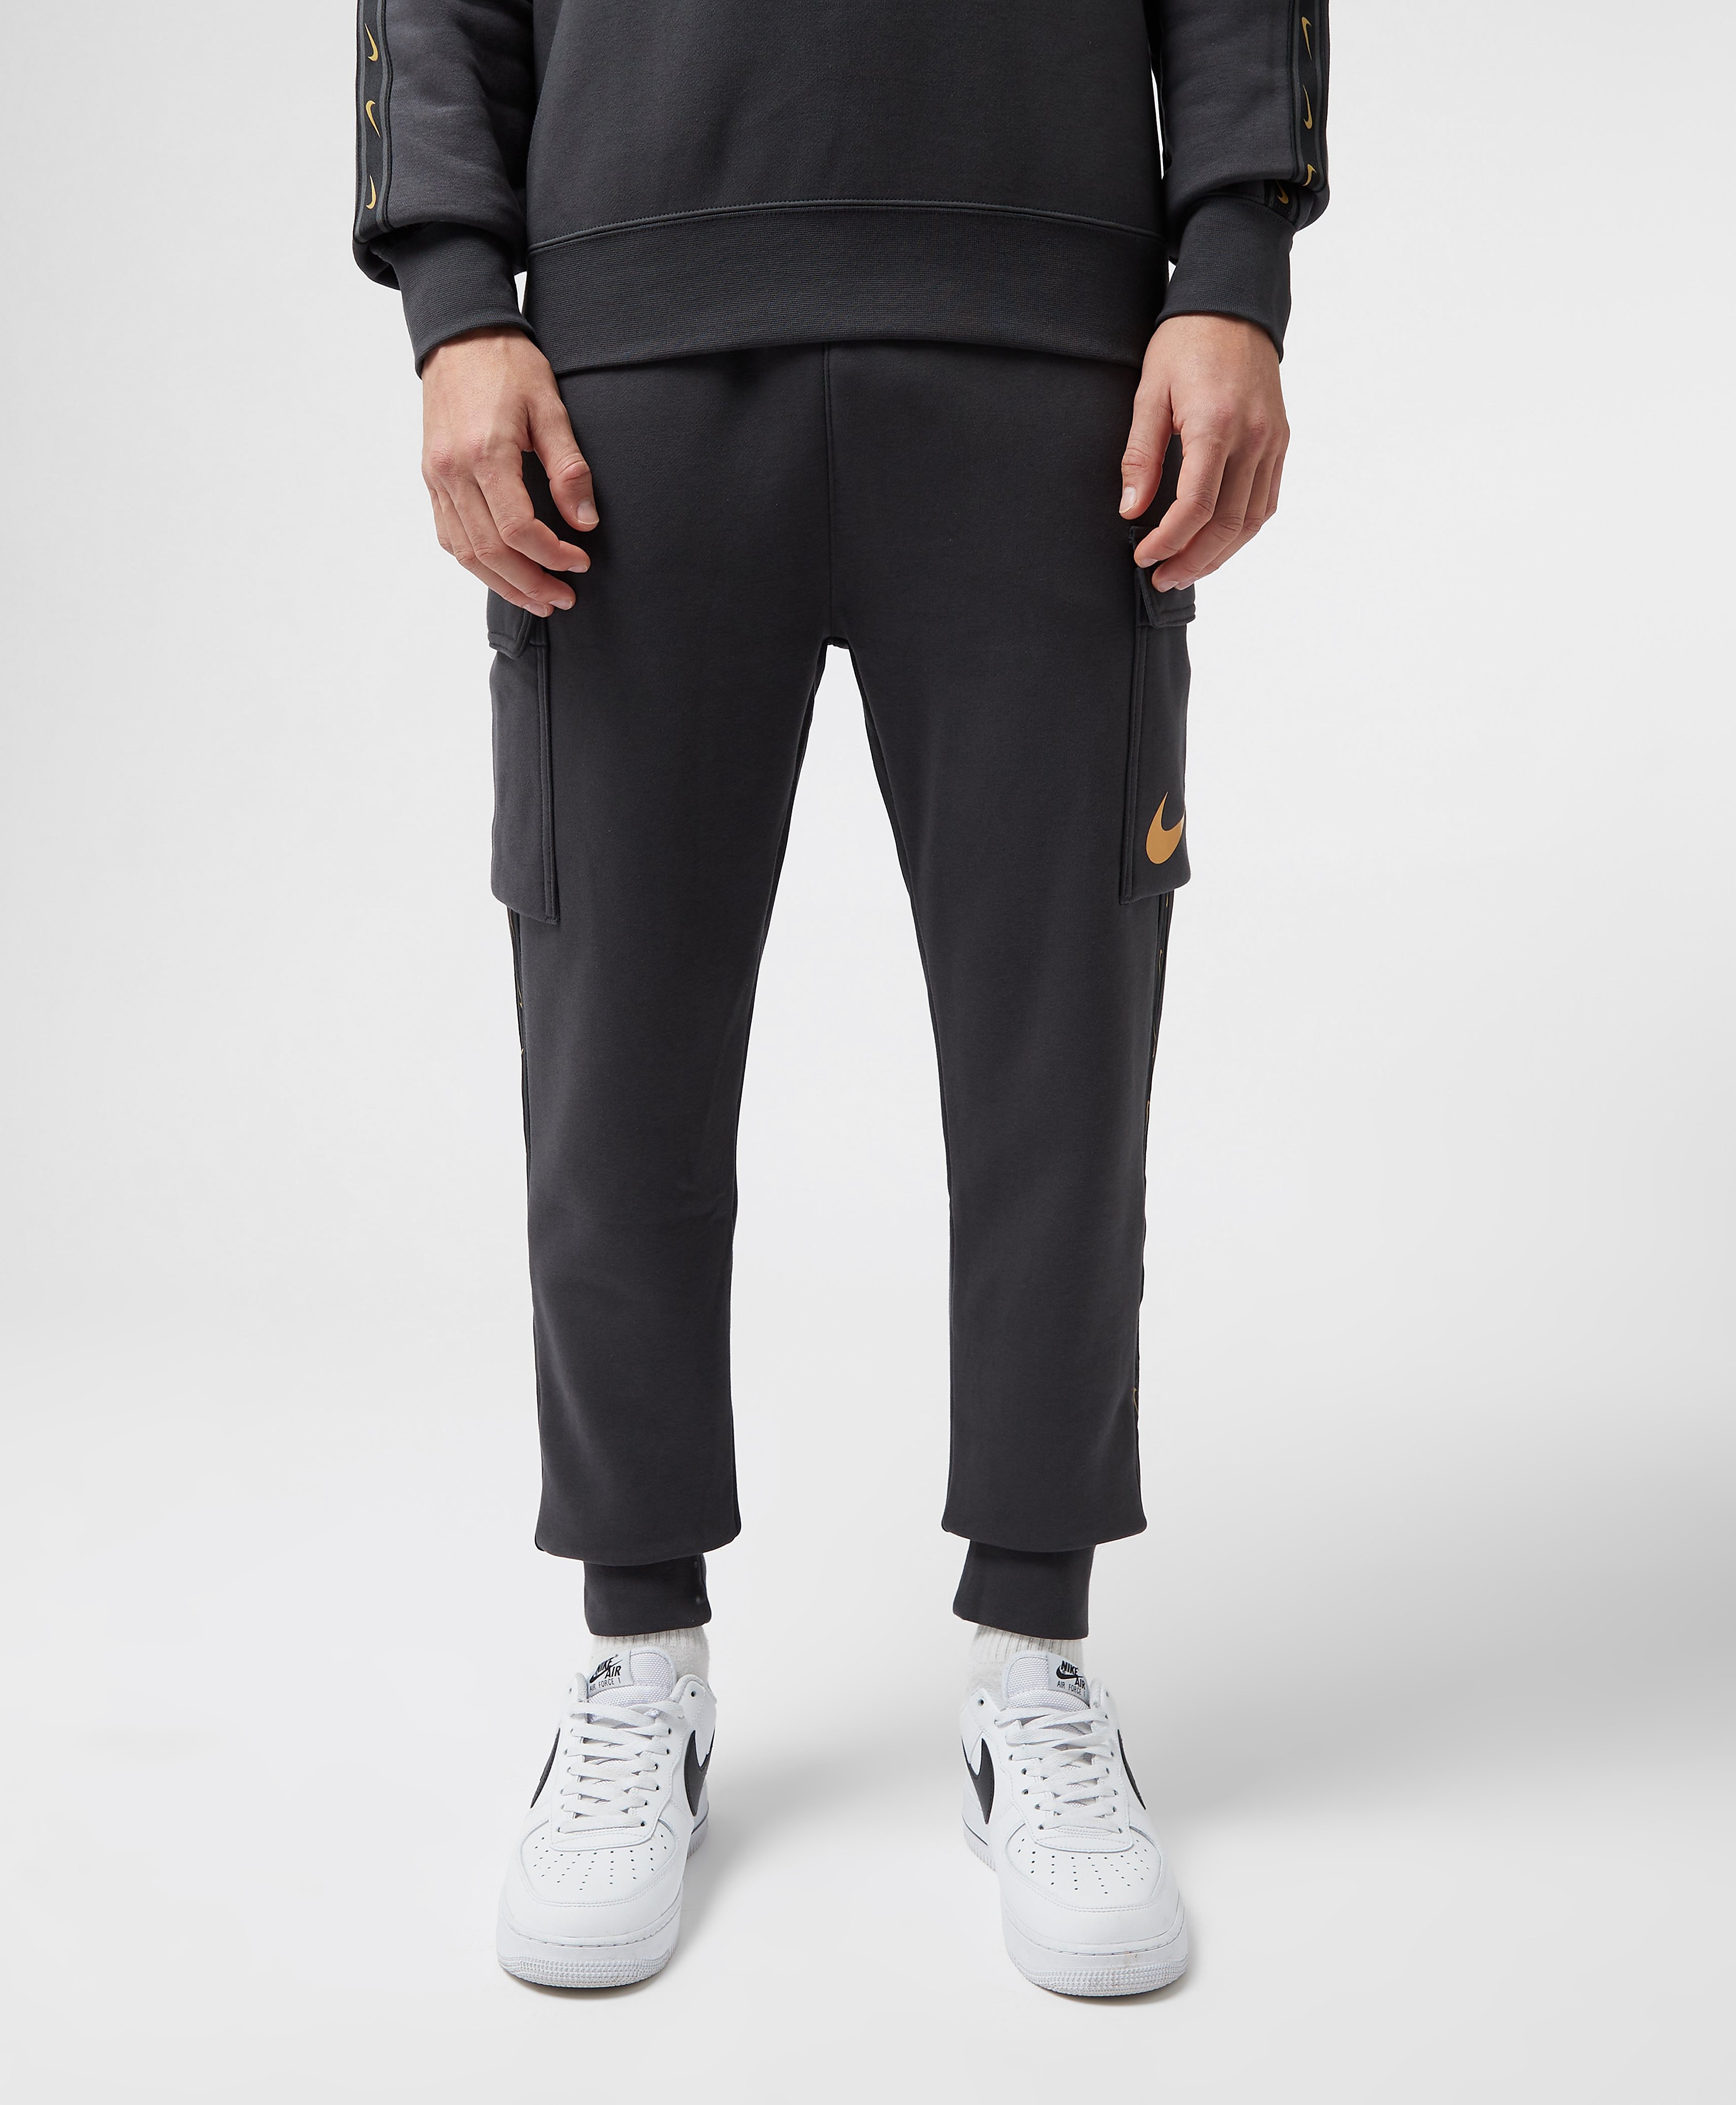 Nike Men's Repeat Fleece Joggers - Grey, Grey